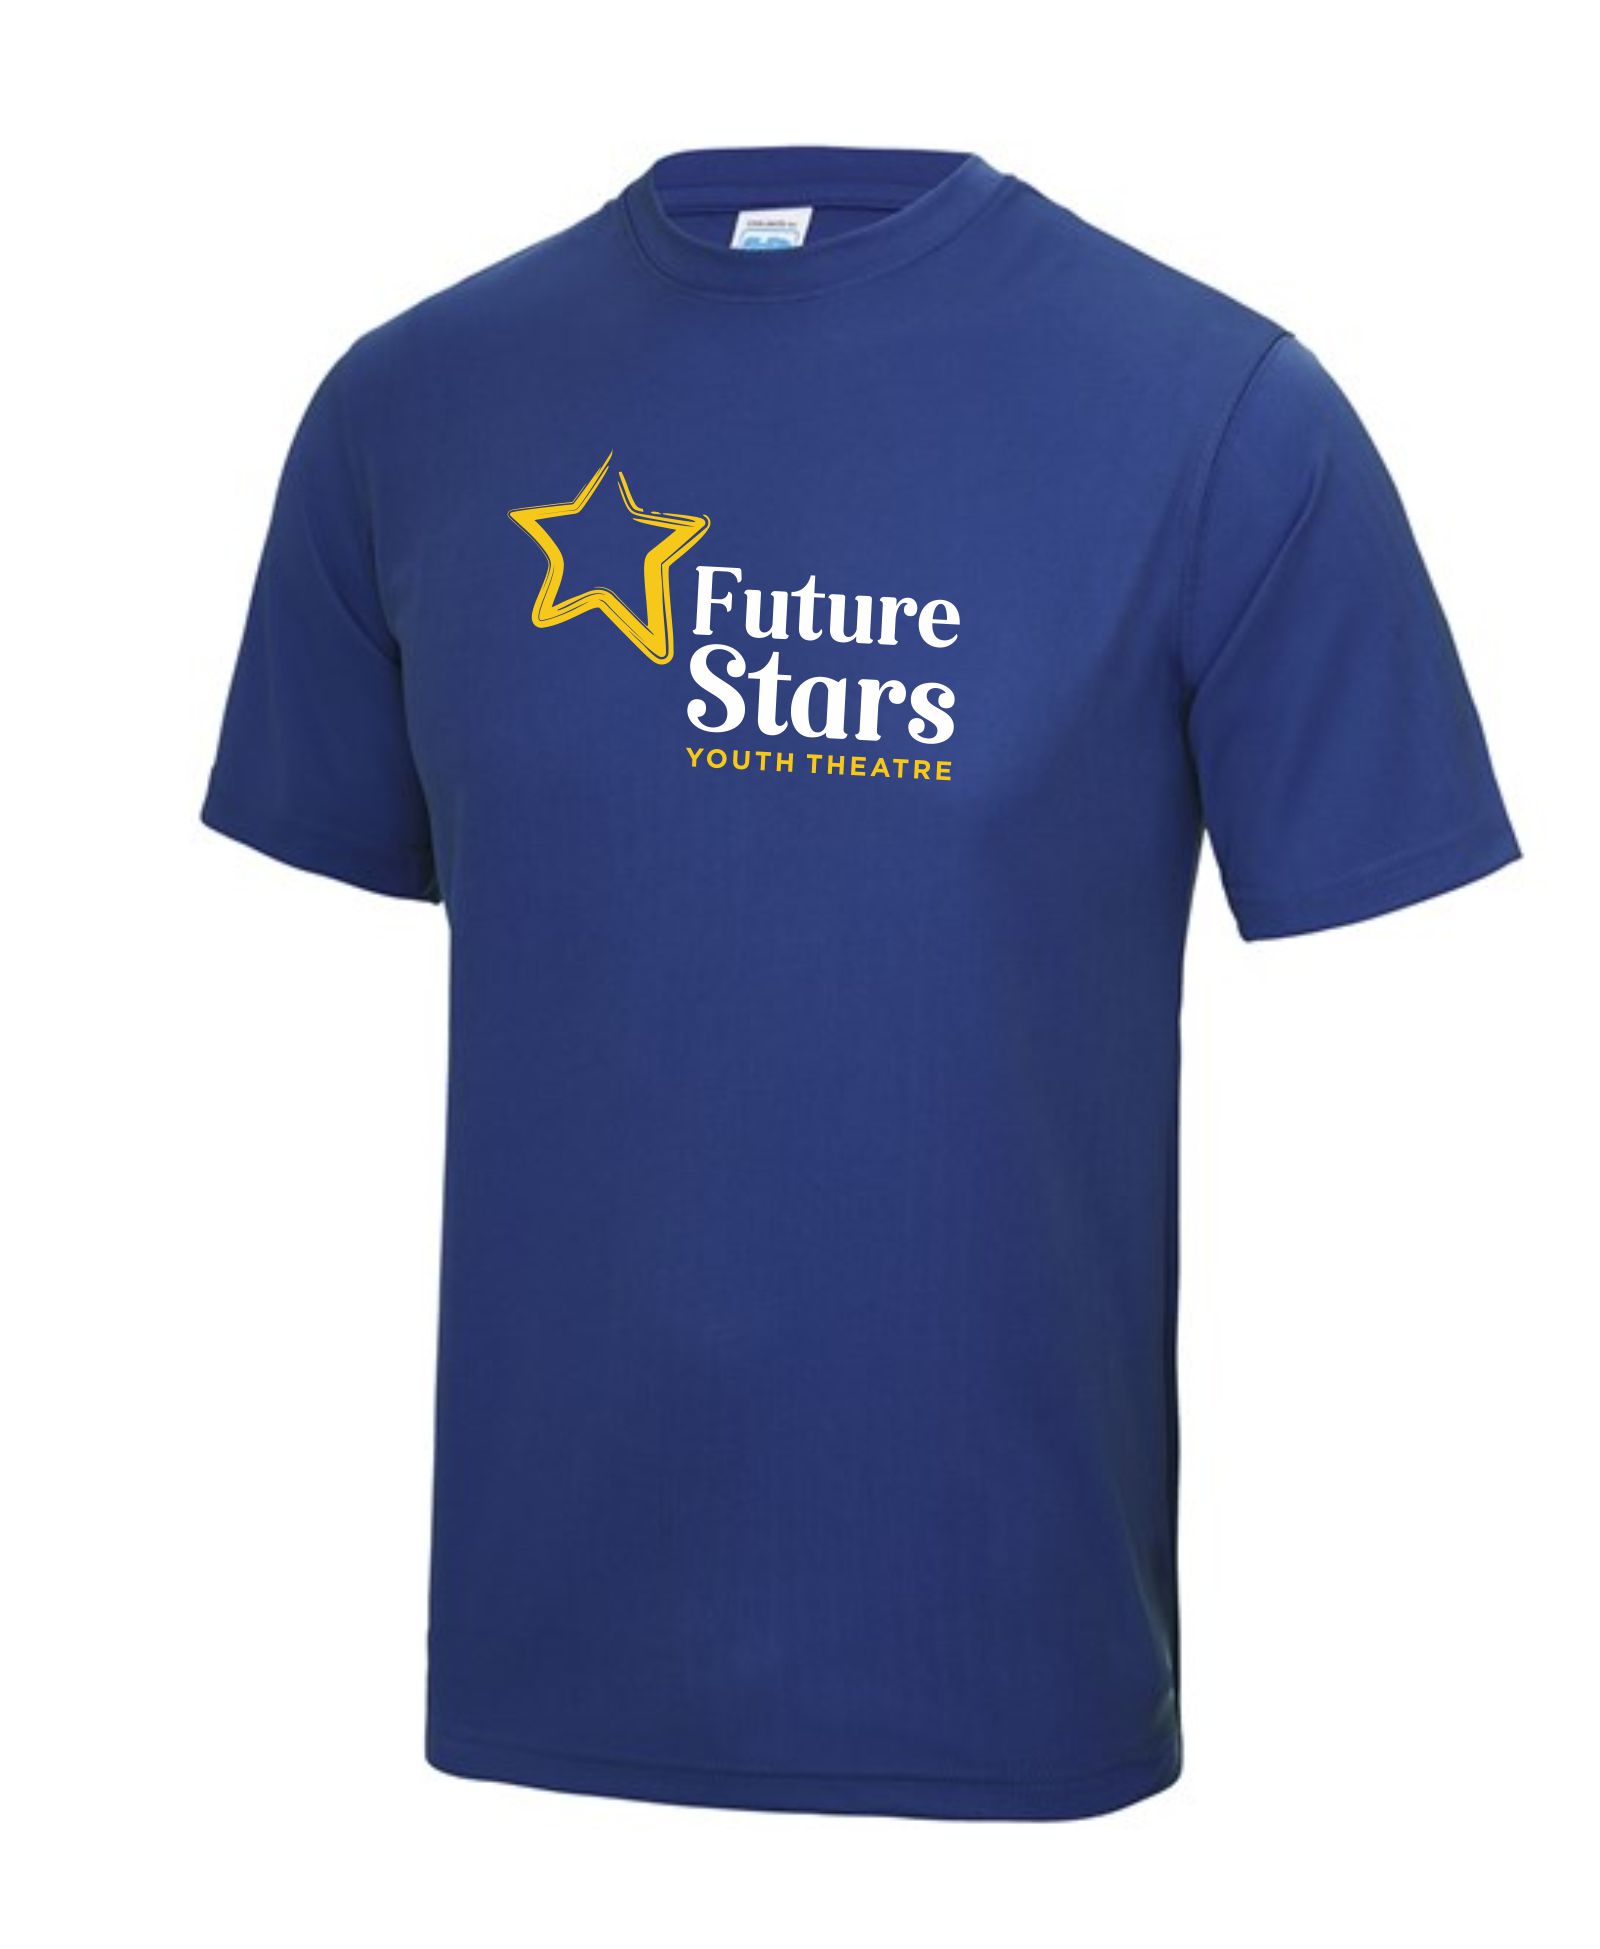 Future Stars Youth Theatre – Dri Fit Colour T Shirt (Kids)